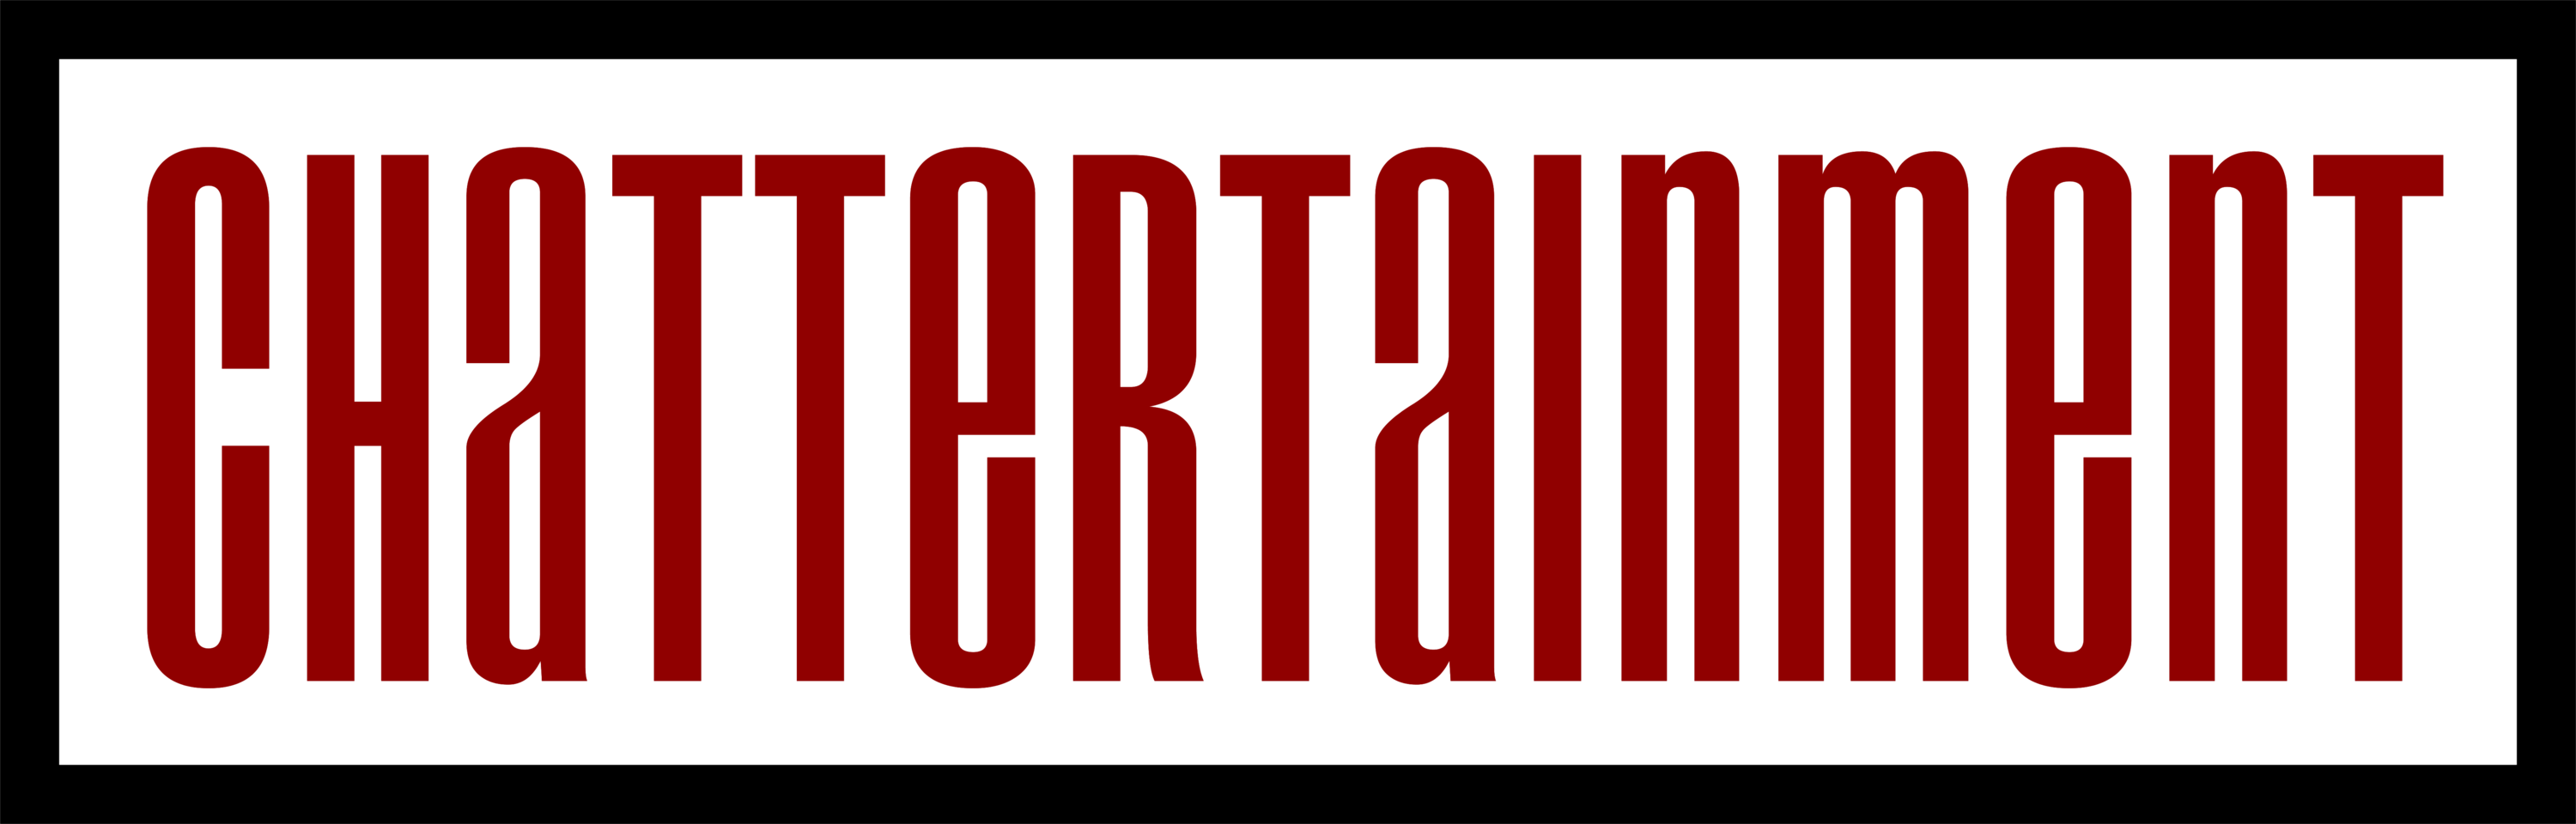 Chattertainment Productions, LLC Logo